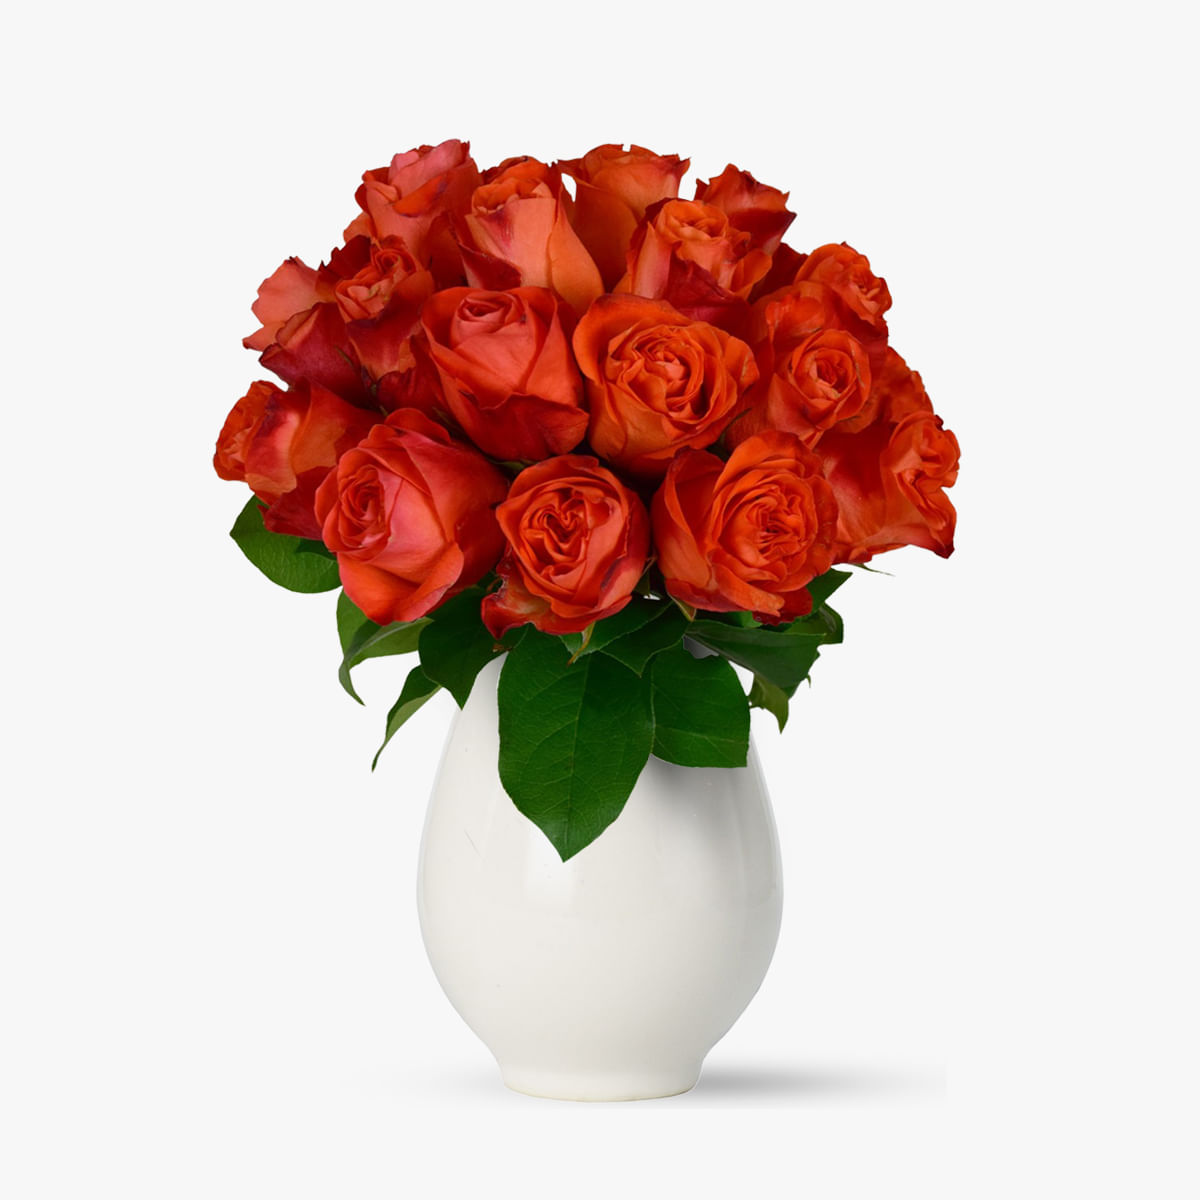 Buchet de 15 trandafiri portocalii – Standard Buchet